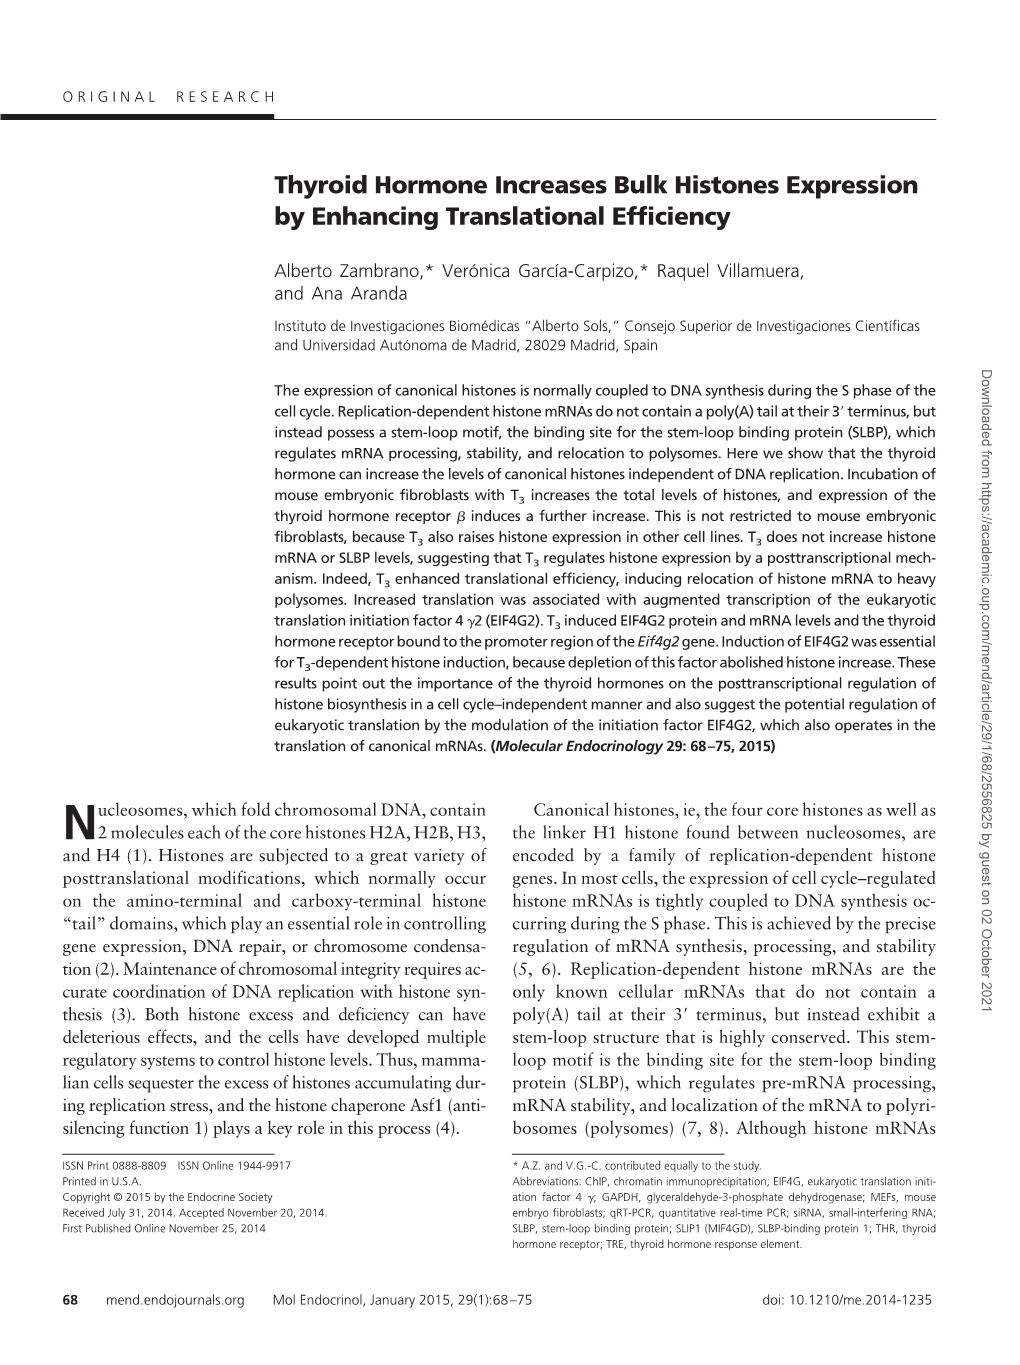 Thyroid Hormone Increases Bulk Histones Expression by Enhancing Translational Efficiency